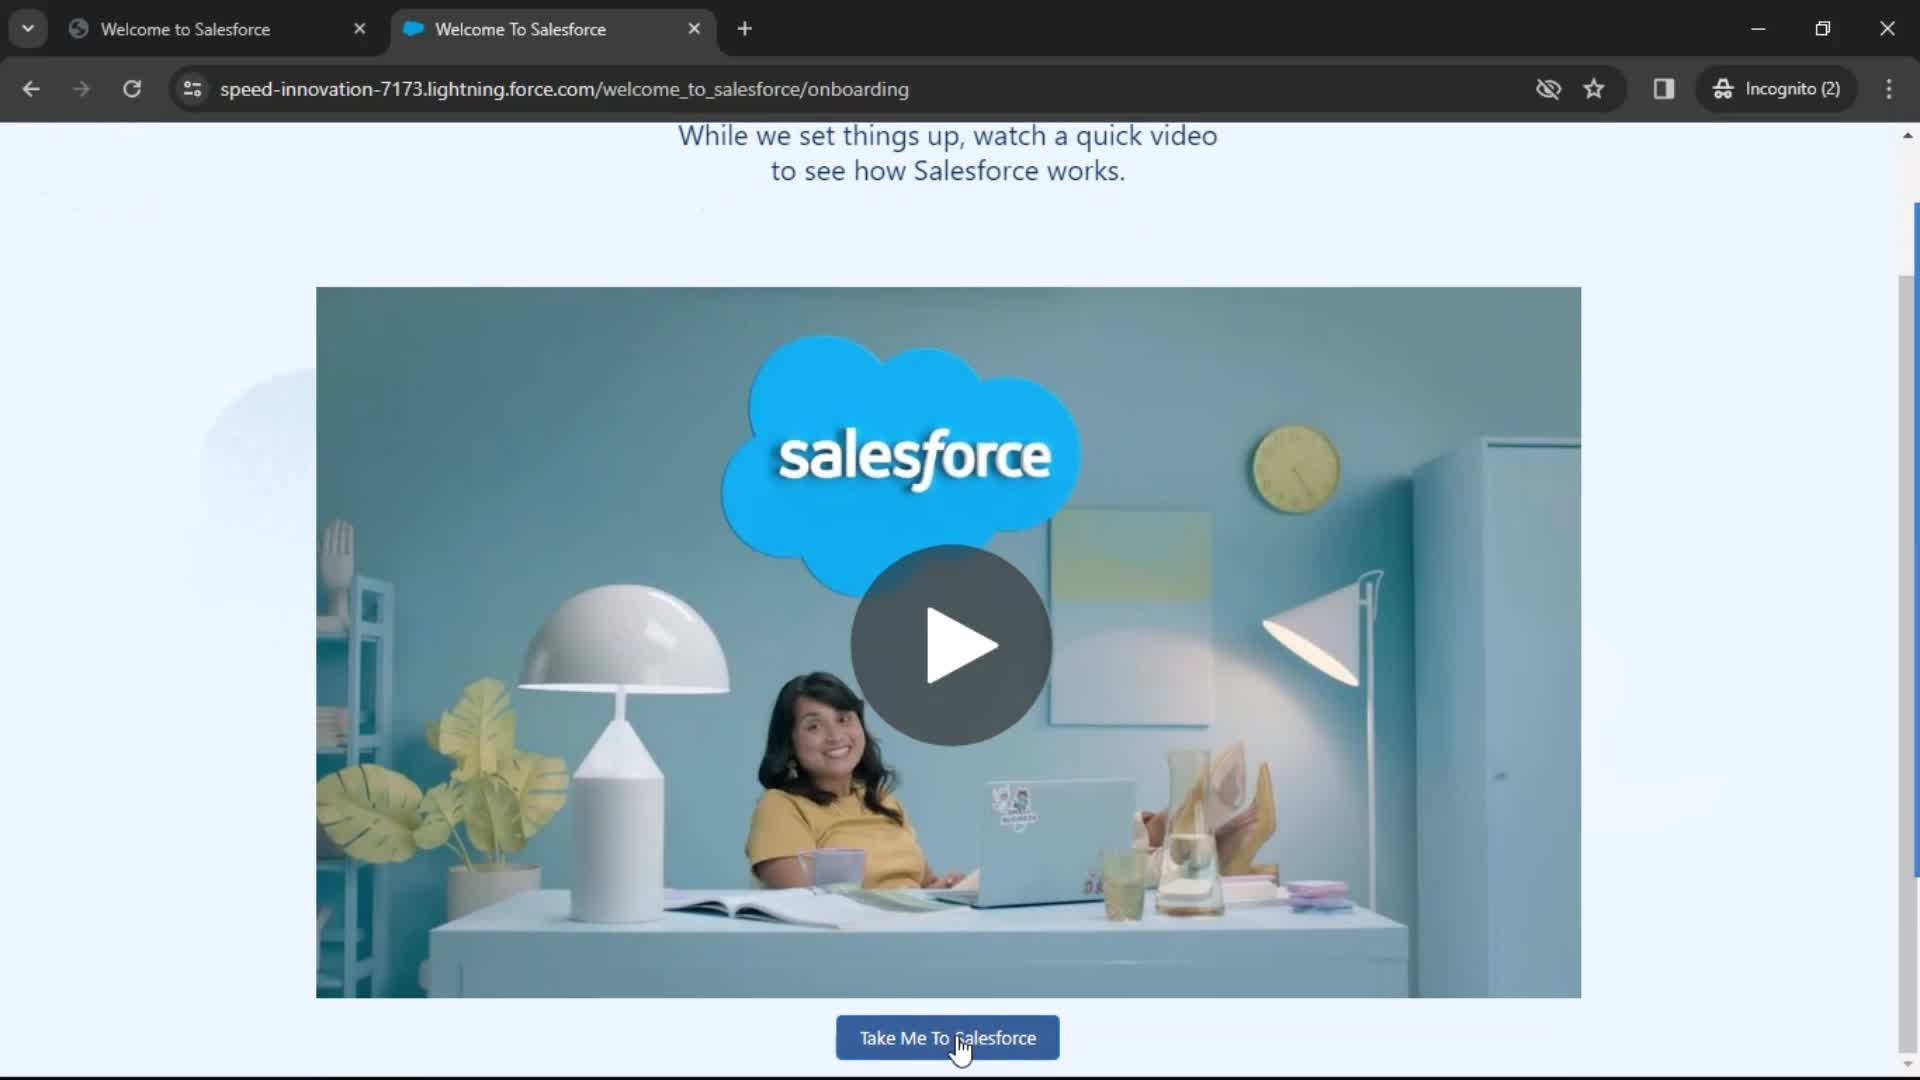 Salesforce welcome video screenshot